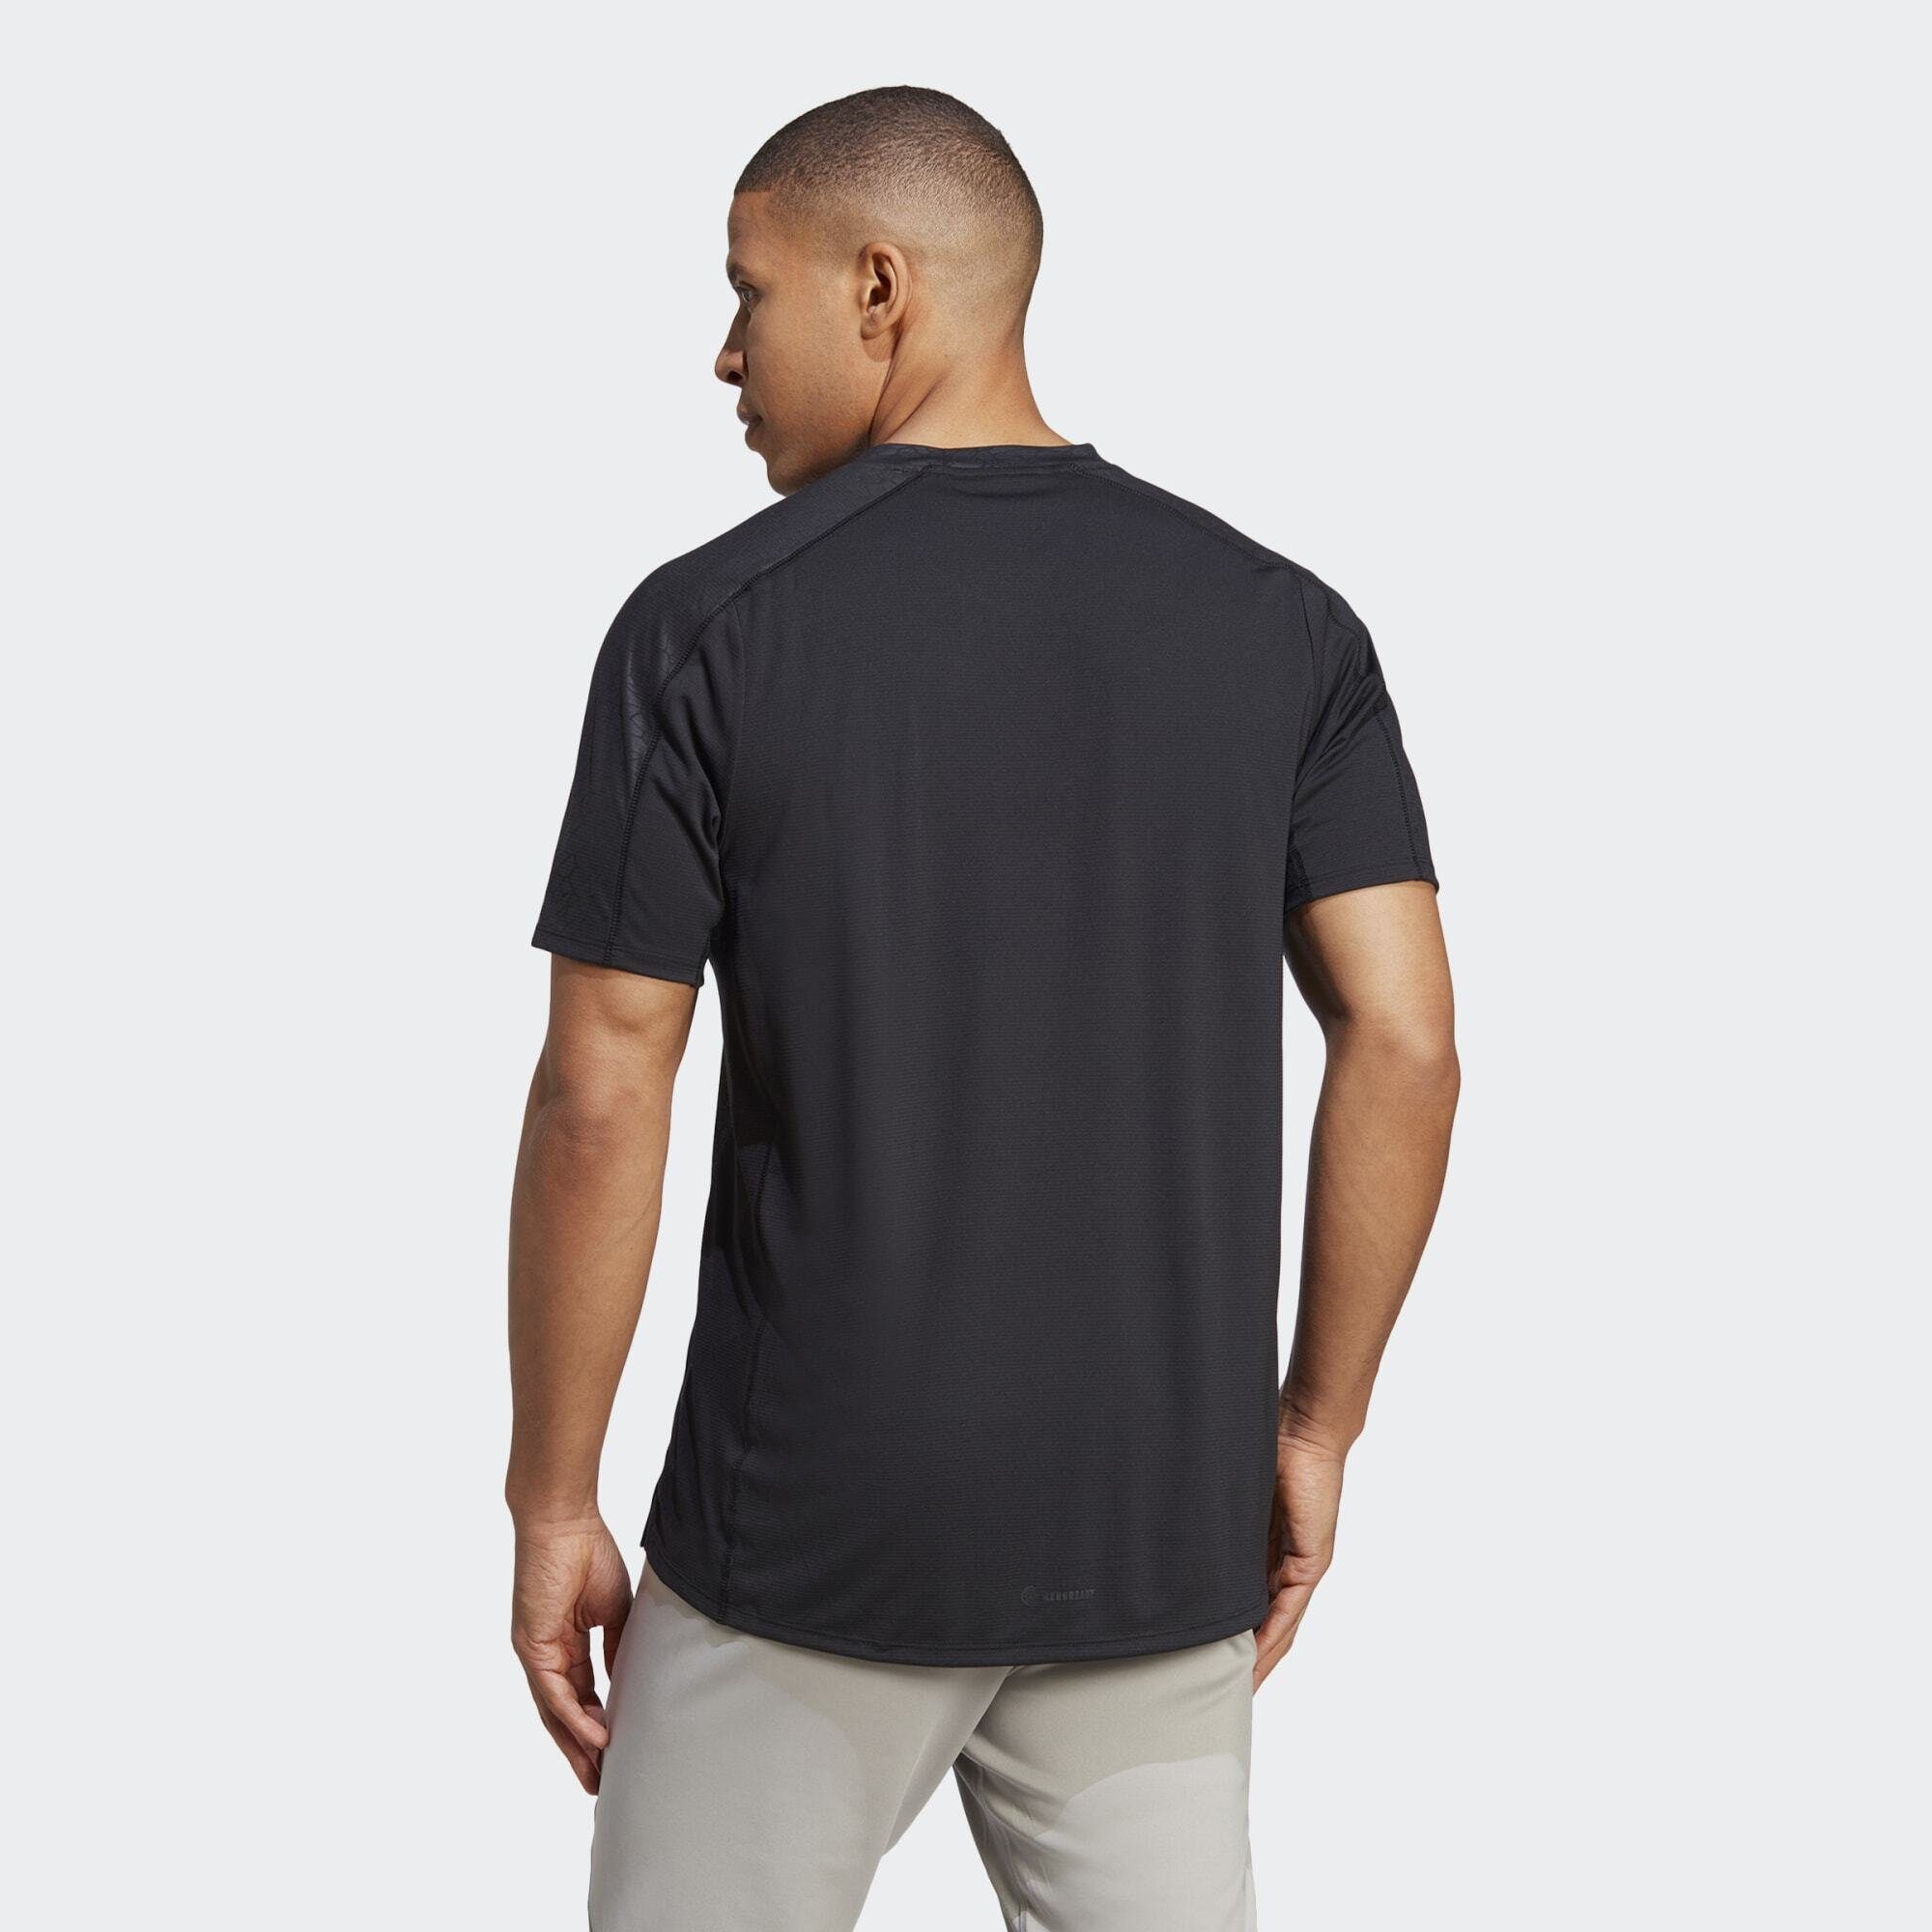 T-SHIRT adidas Black WORKOUT Performance PU PRINT Funktionsshirt